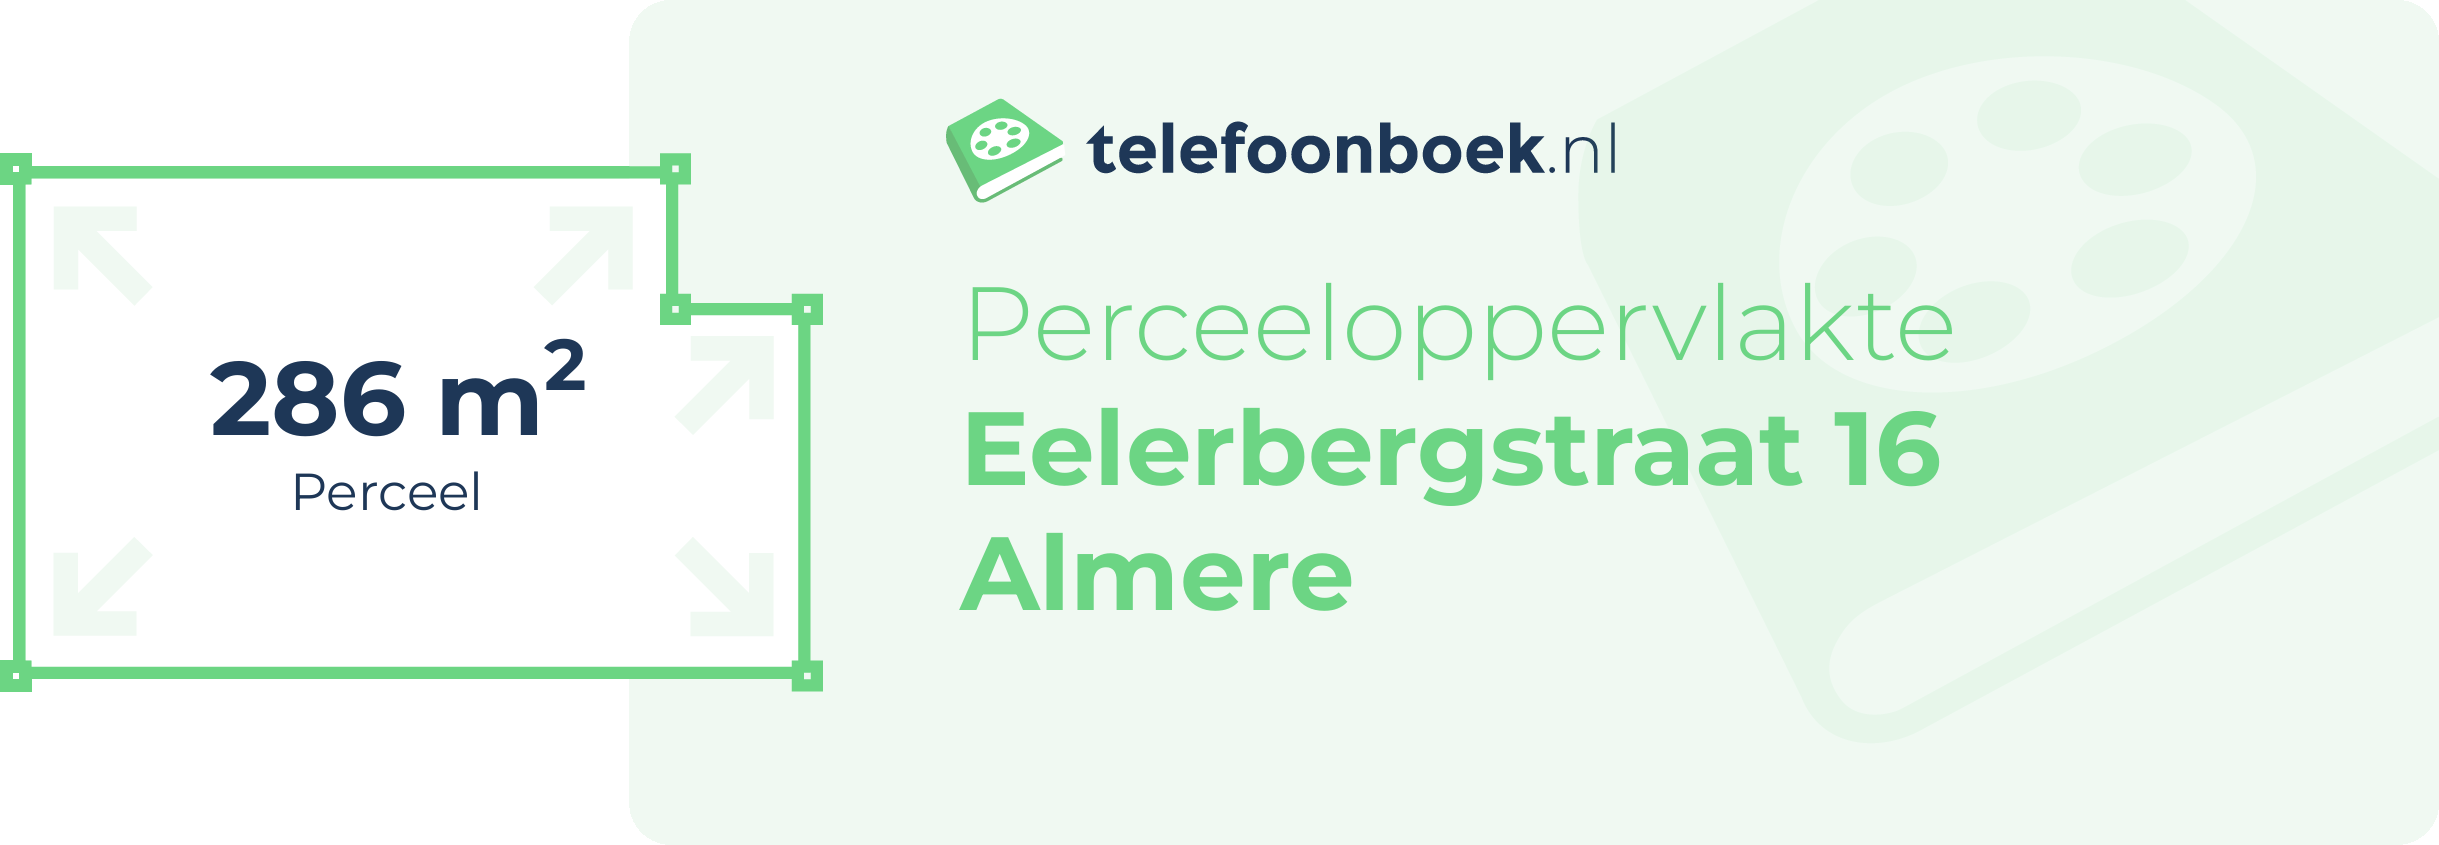 Perceeloppervlakte Eelerbergstraat 16 Almere